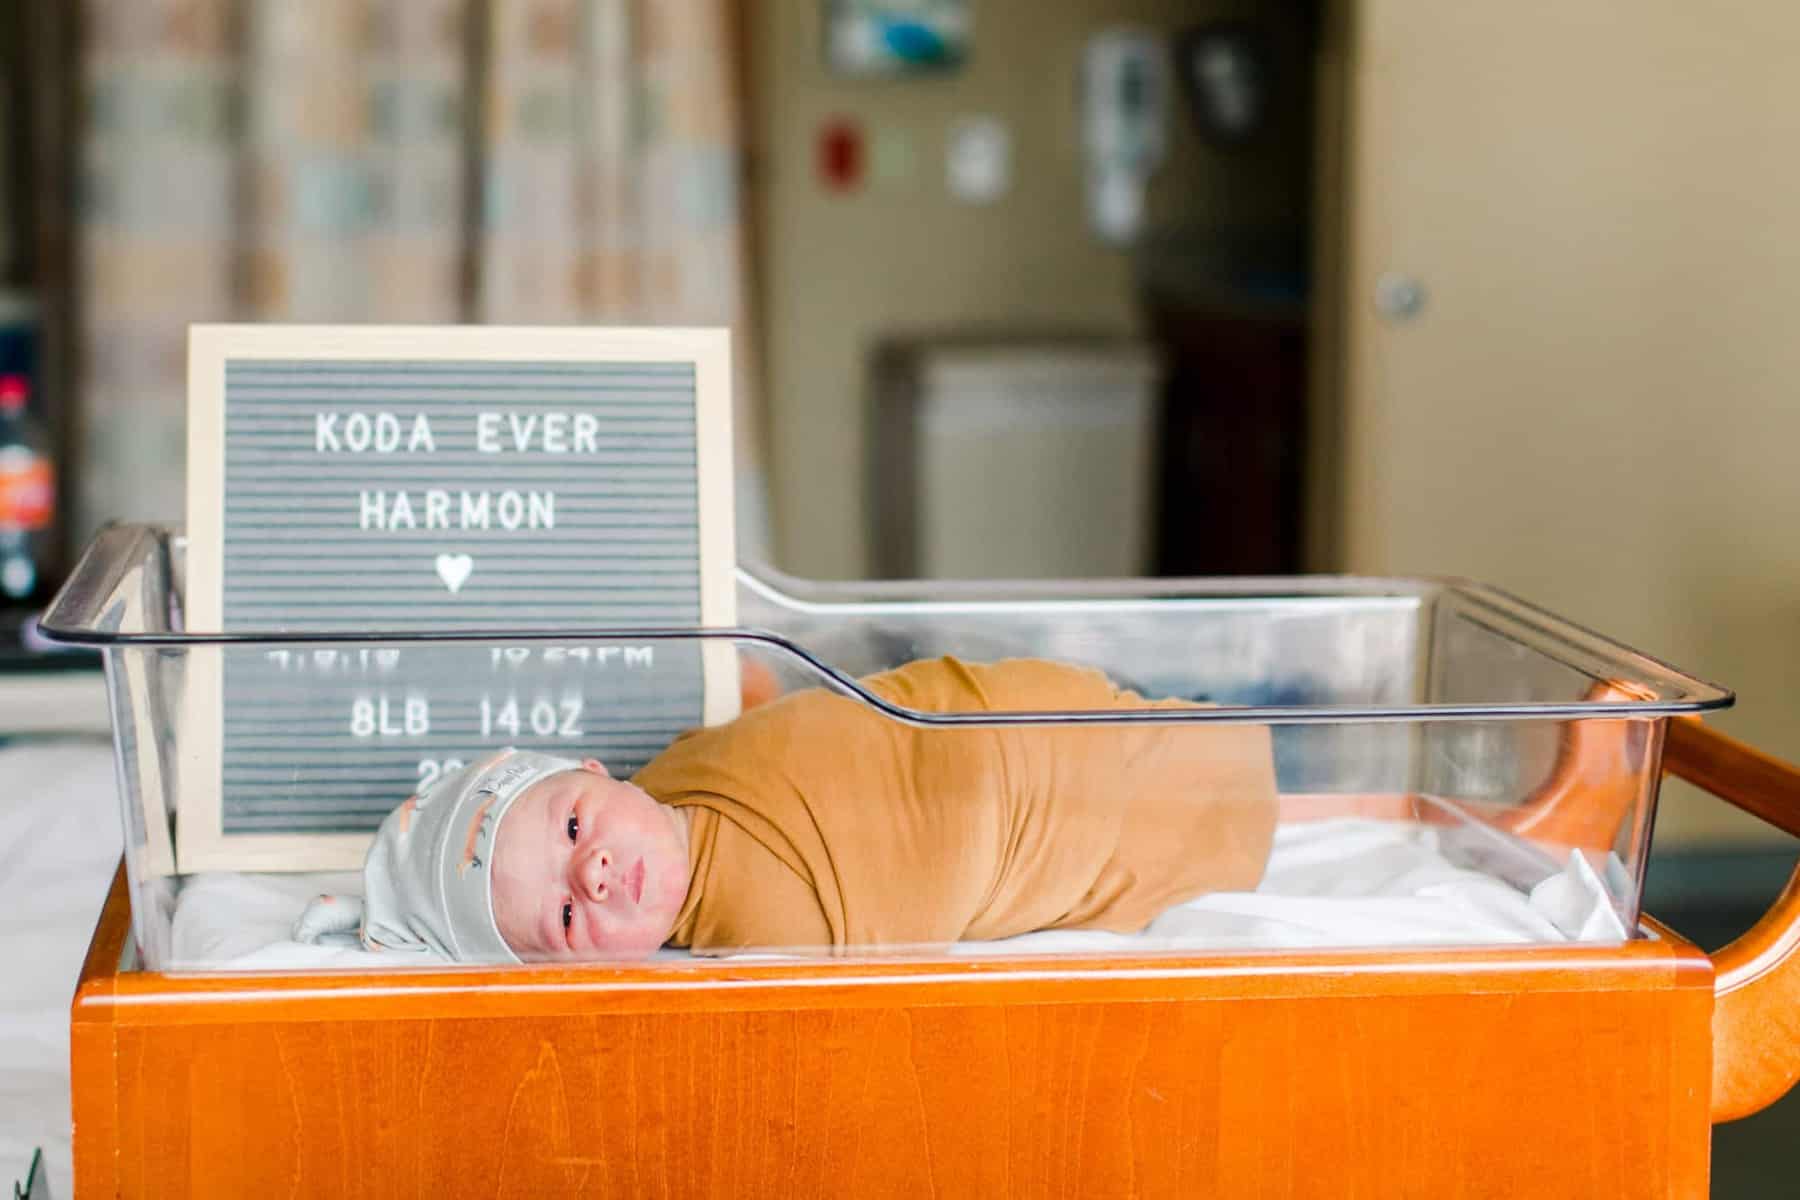 DIY Hospital Newborn Photos